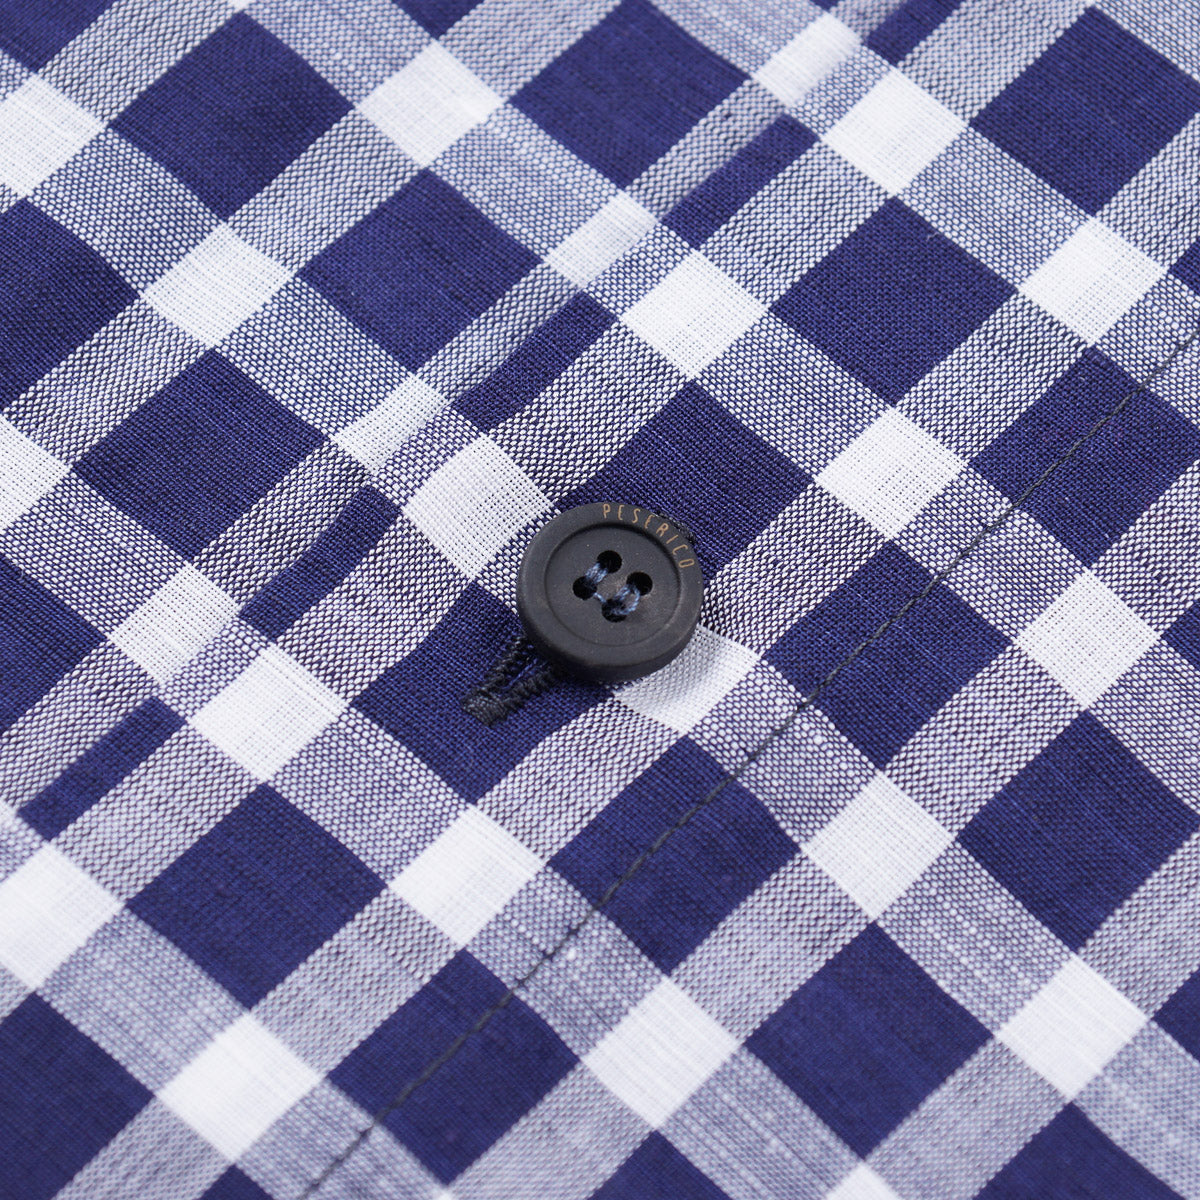 Peserico Linen and Cotton Dress Shirt - Top Shelf Apparel